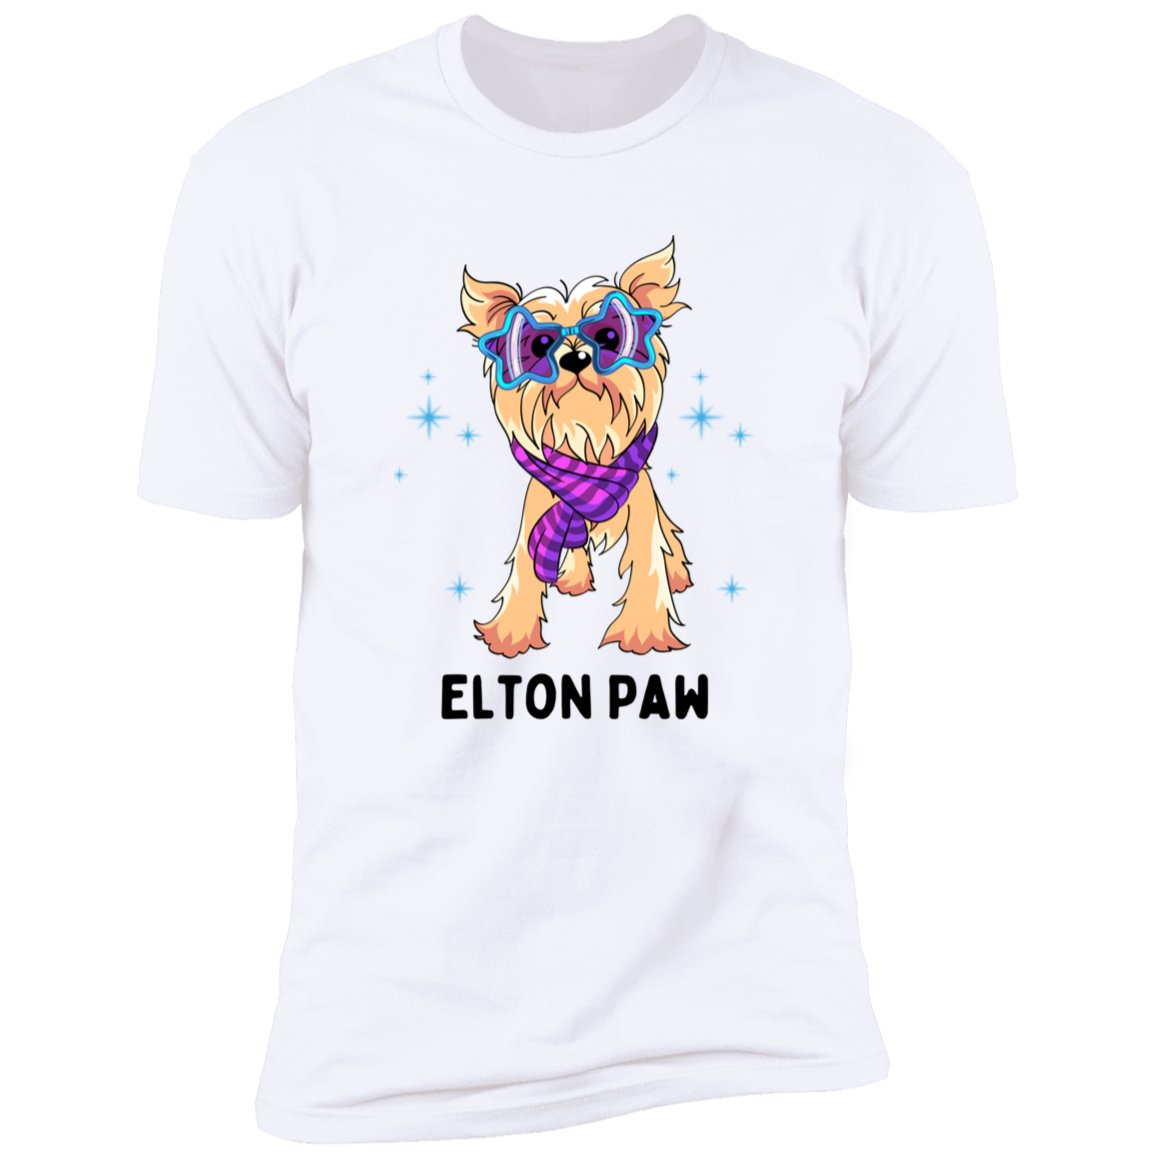 Elton Paw Dog Shirt, Funny dog shirt for humans, Dog mom shirt, dog dad shirt, in white